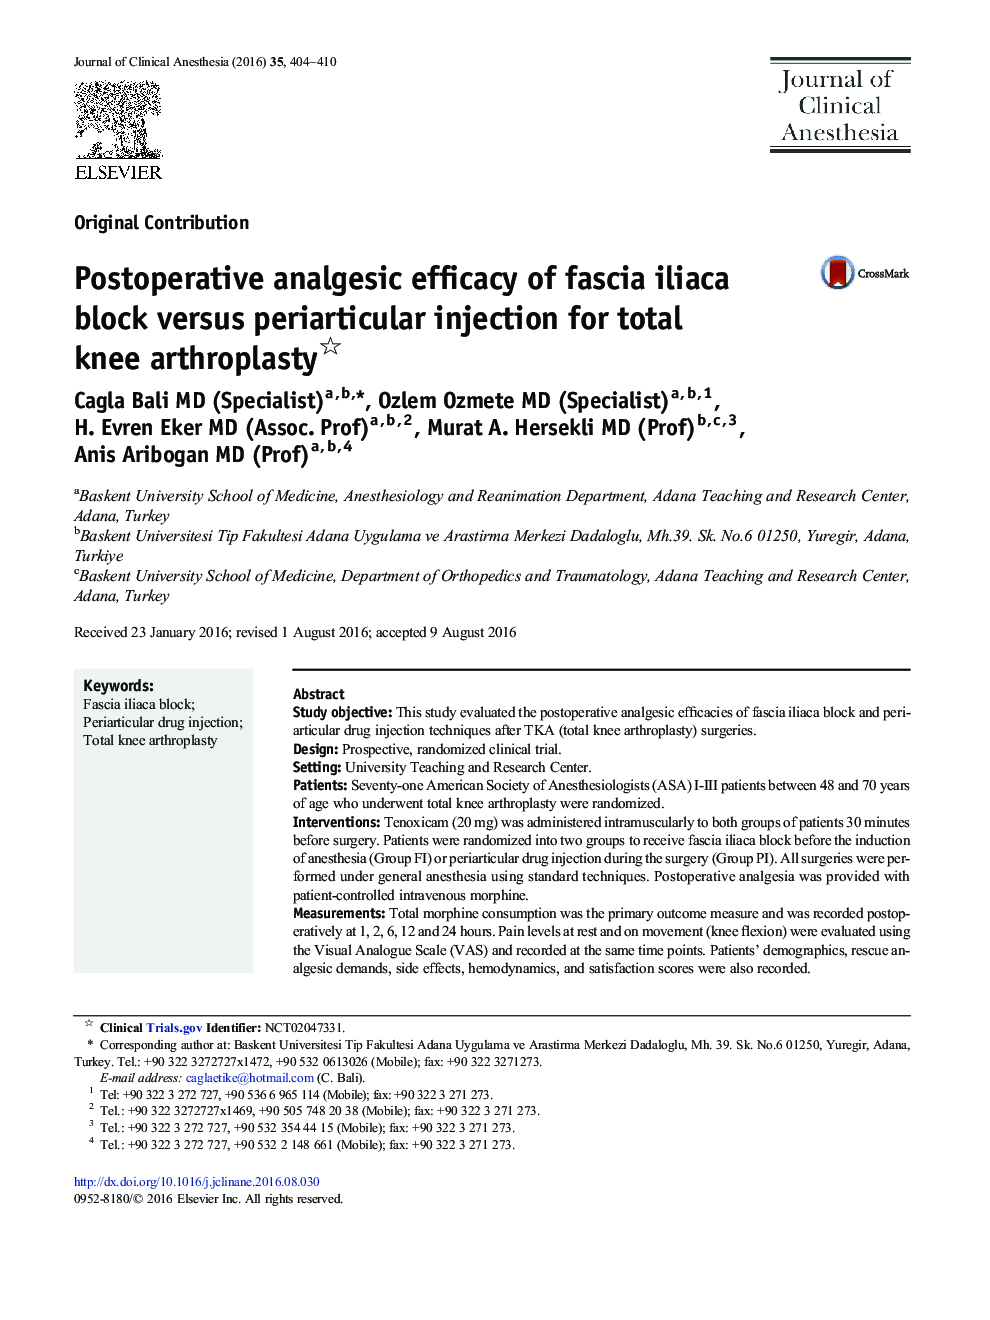 Original ContributionPostoperative analgesic efficacy of fascia iliaca block versus periarticular injection for total knee arthroplasty